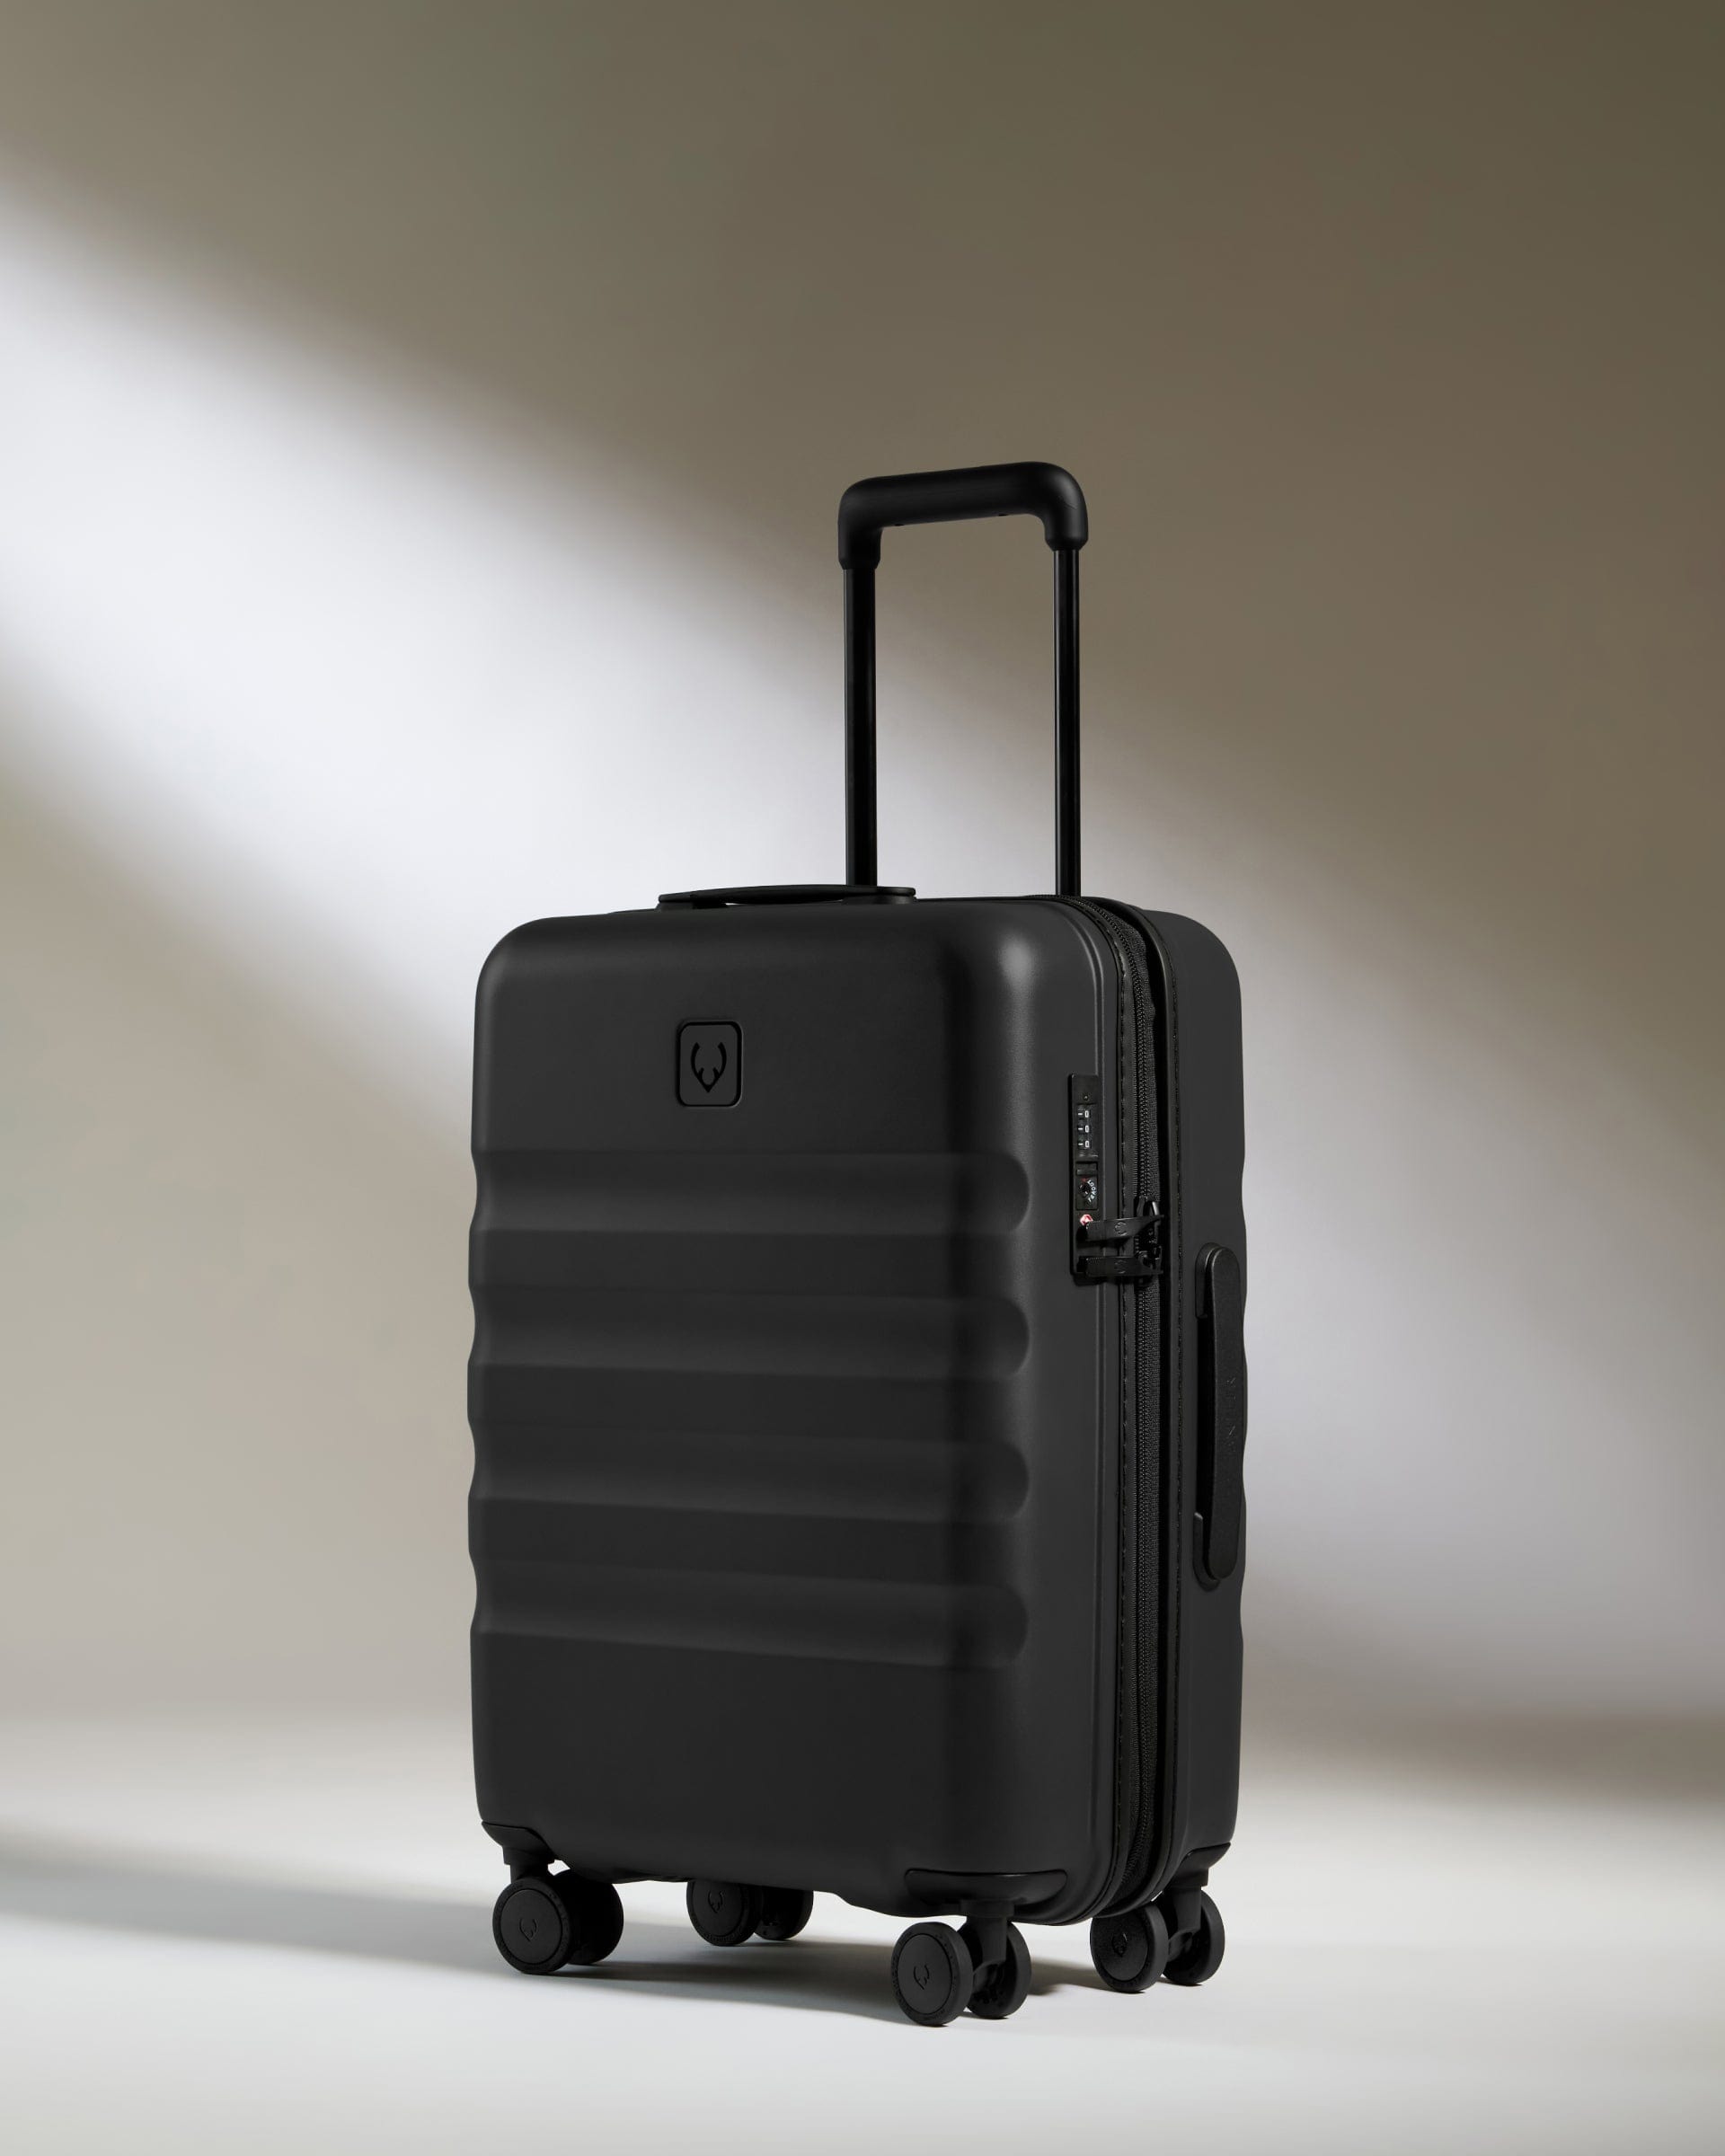 View Antler Icon Stripe Cabin Suitcase In Black Size 20cm x 55cm x 40cm information